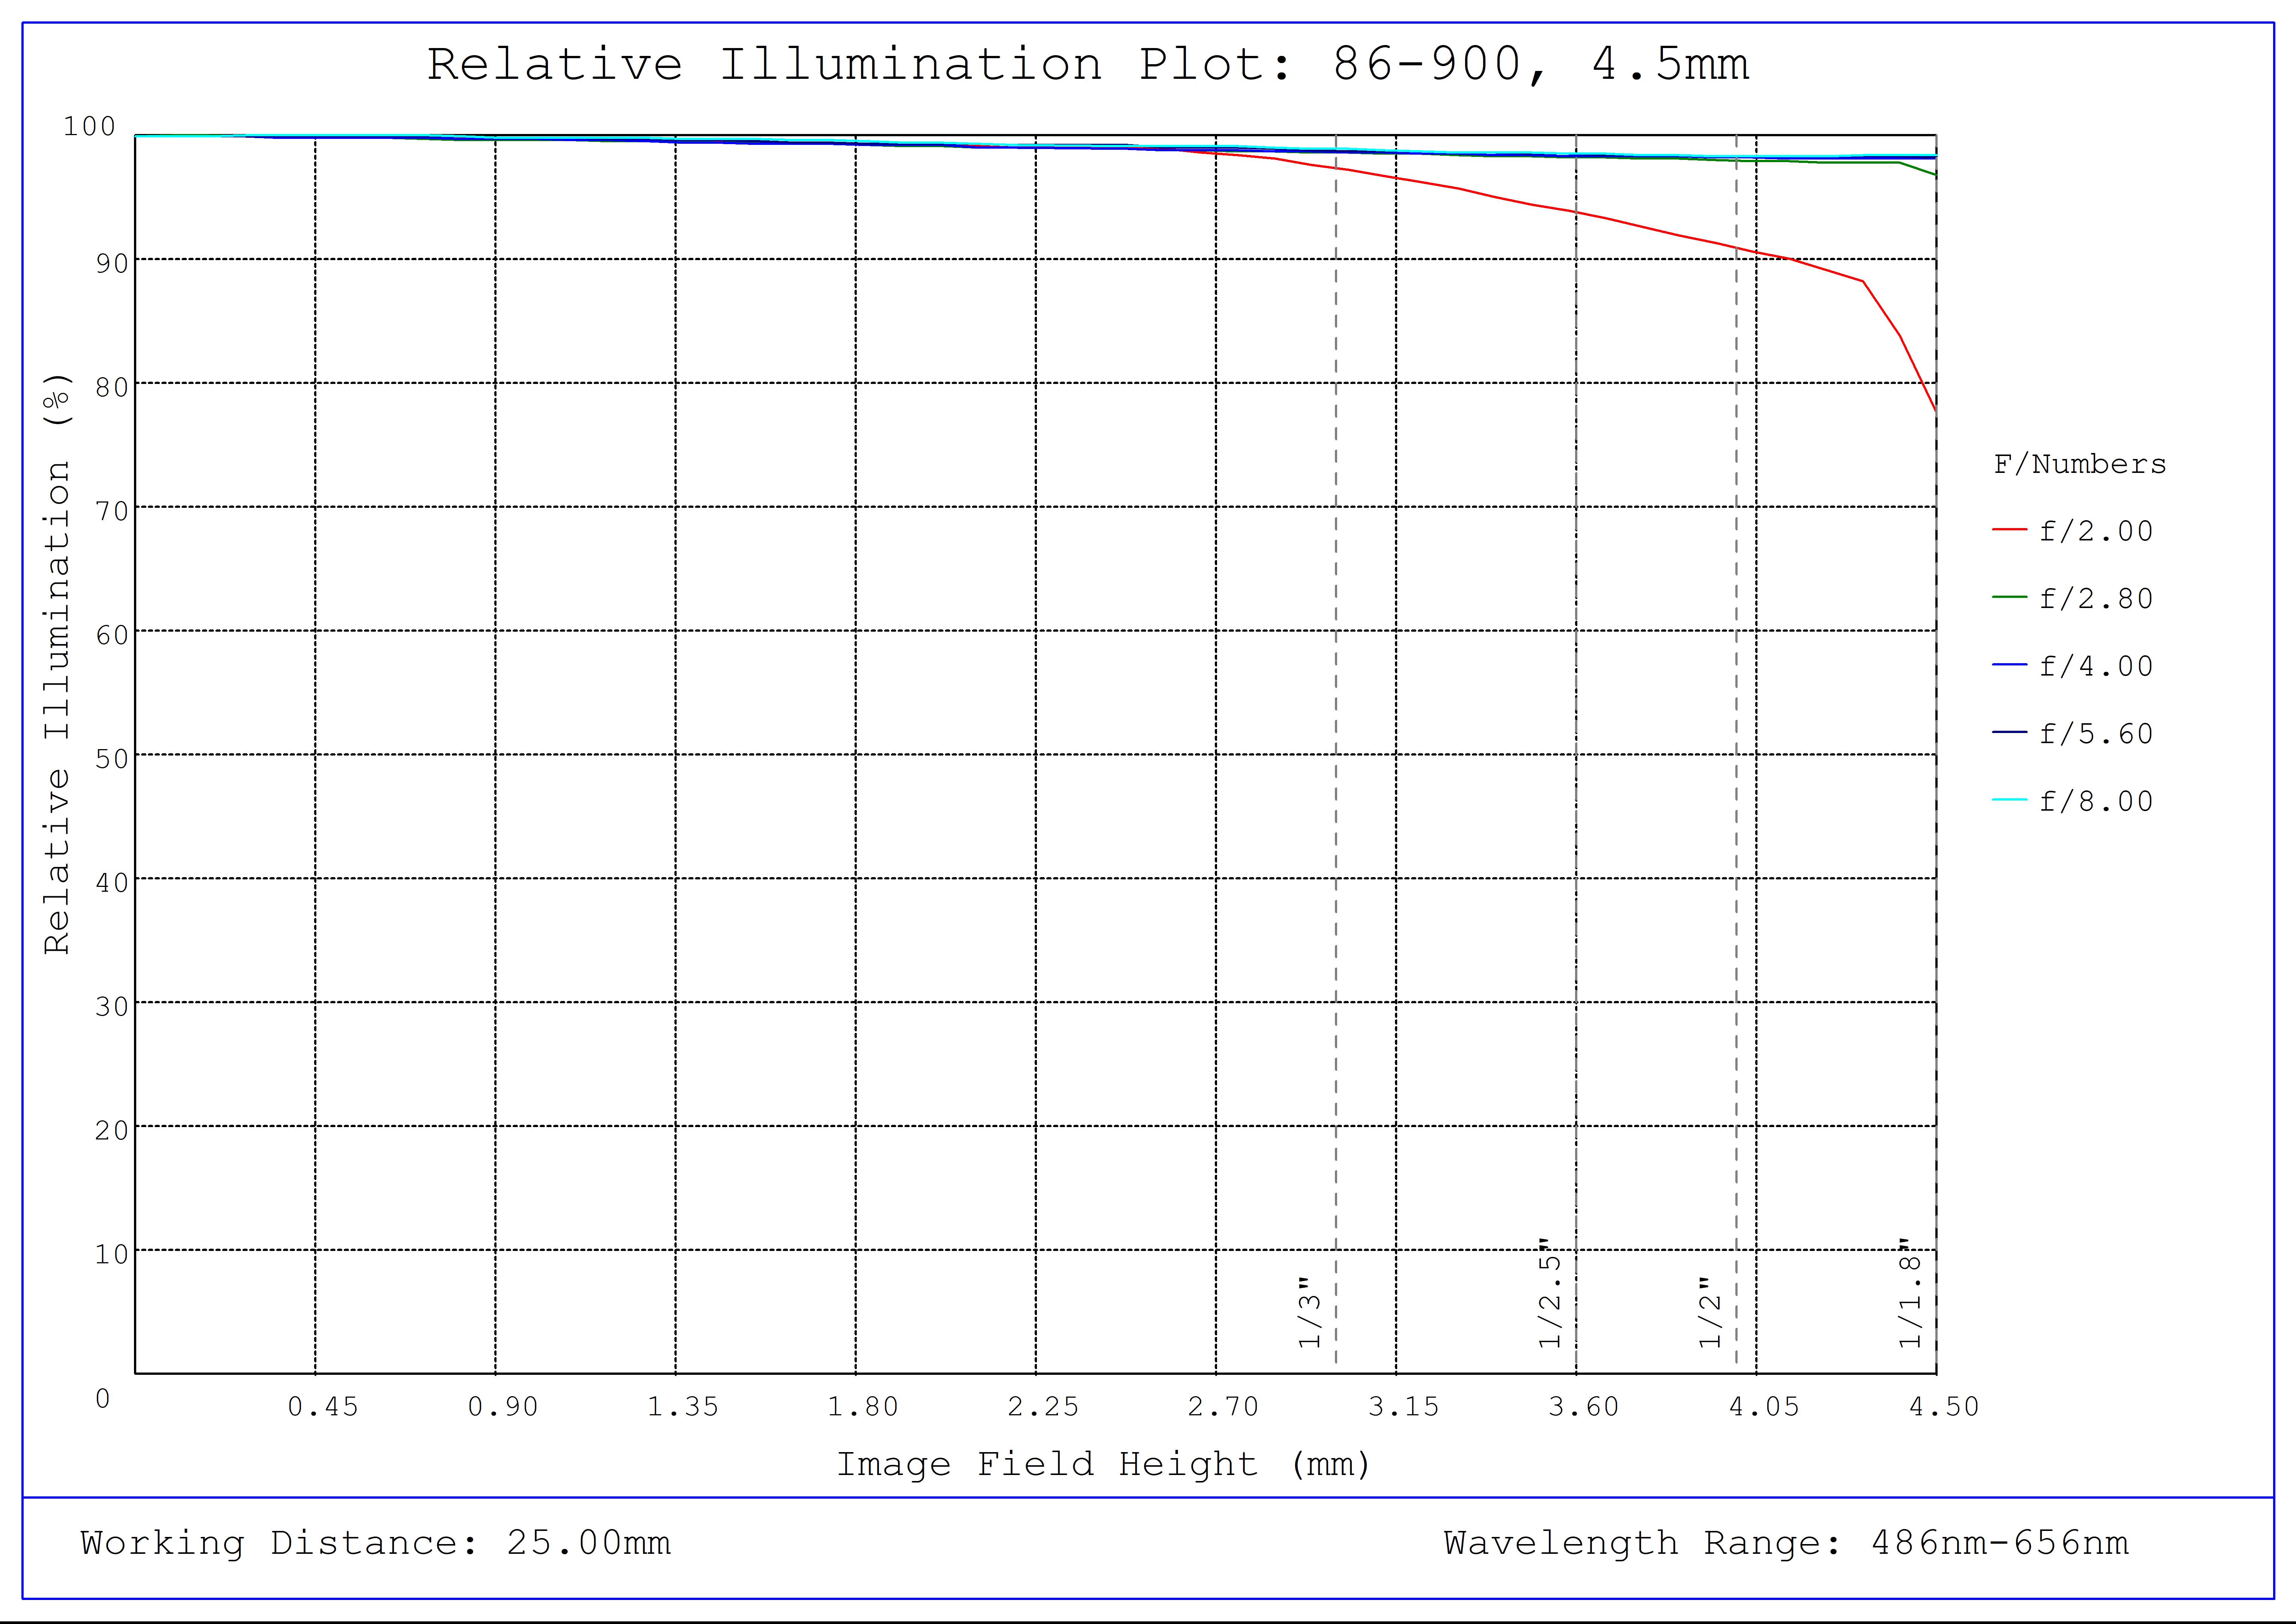 #86-900, 4.5mm C Series Fixed Focal Length Lens, Relative Illumination Plot